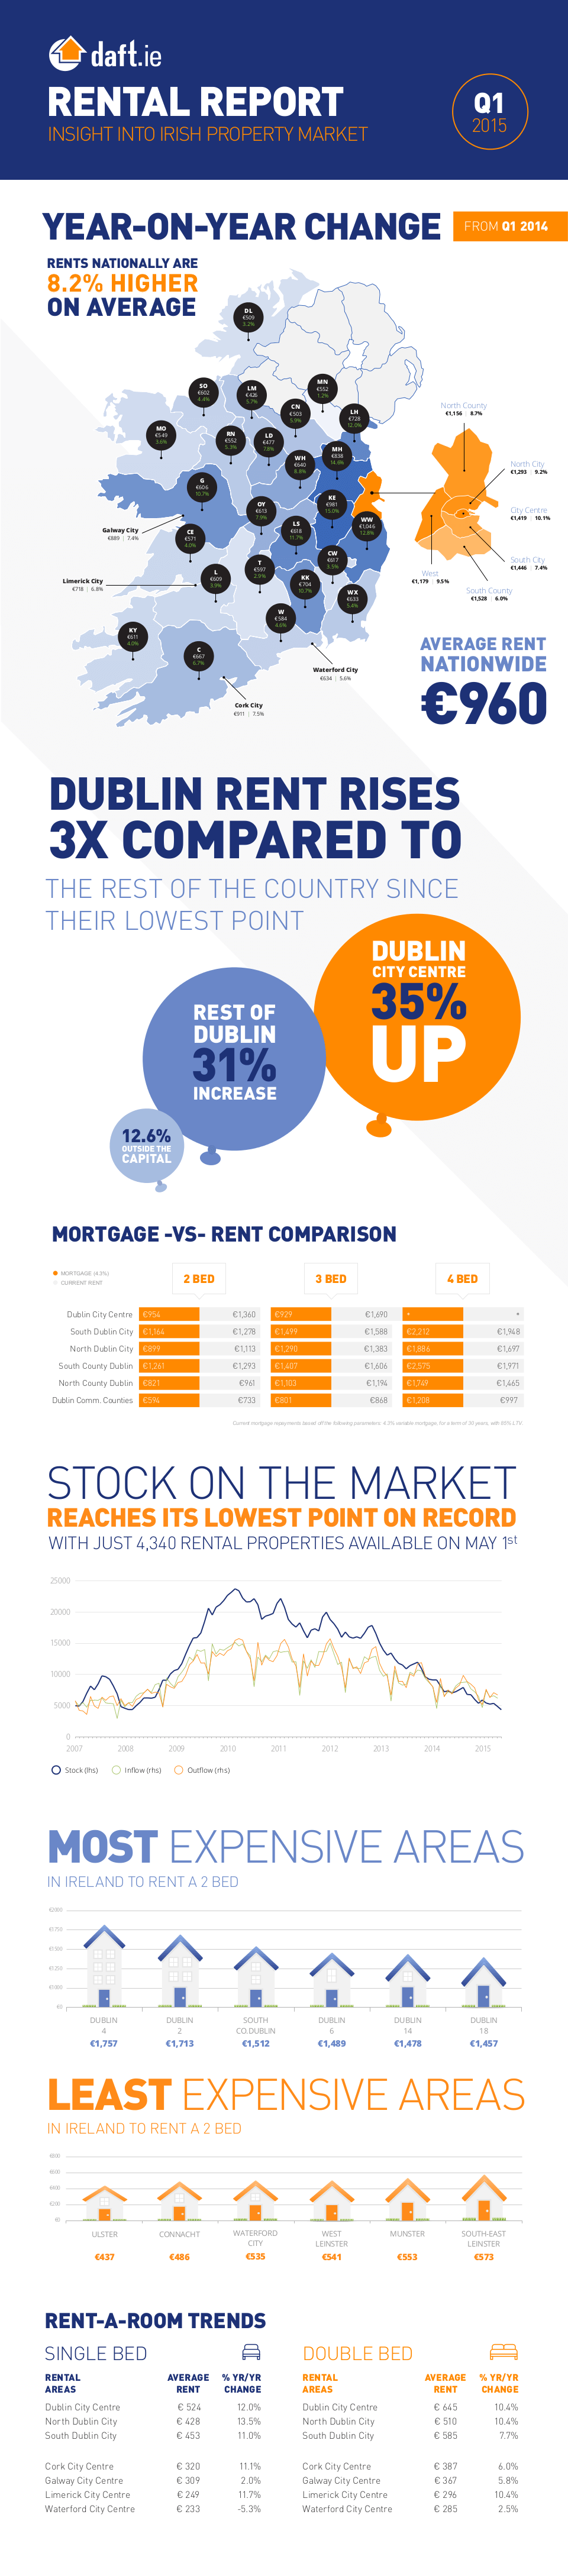 Daft.ie Rental Report: Q1 2015 Infographic